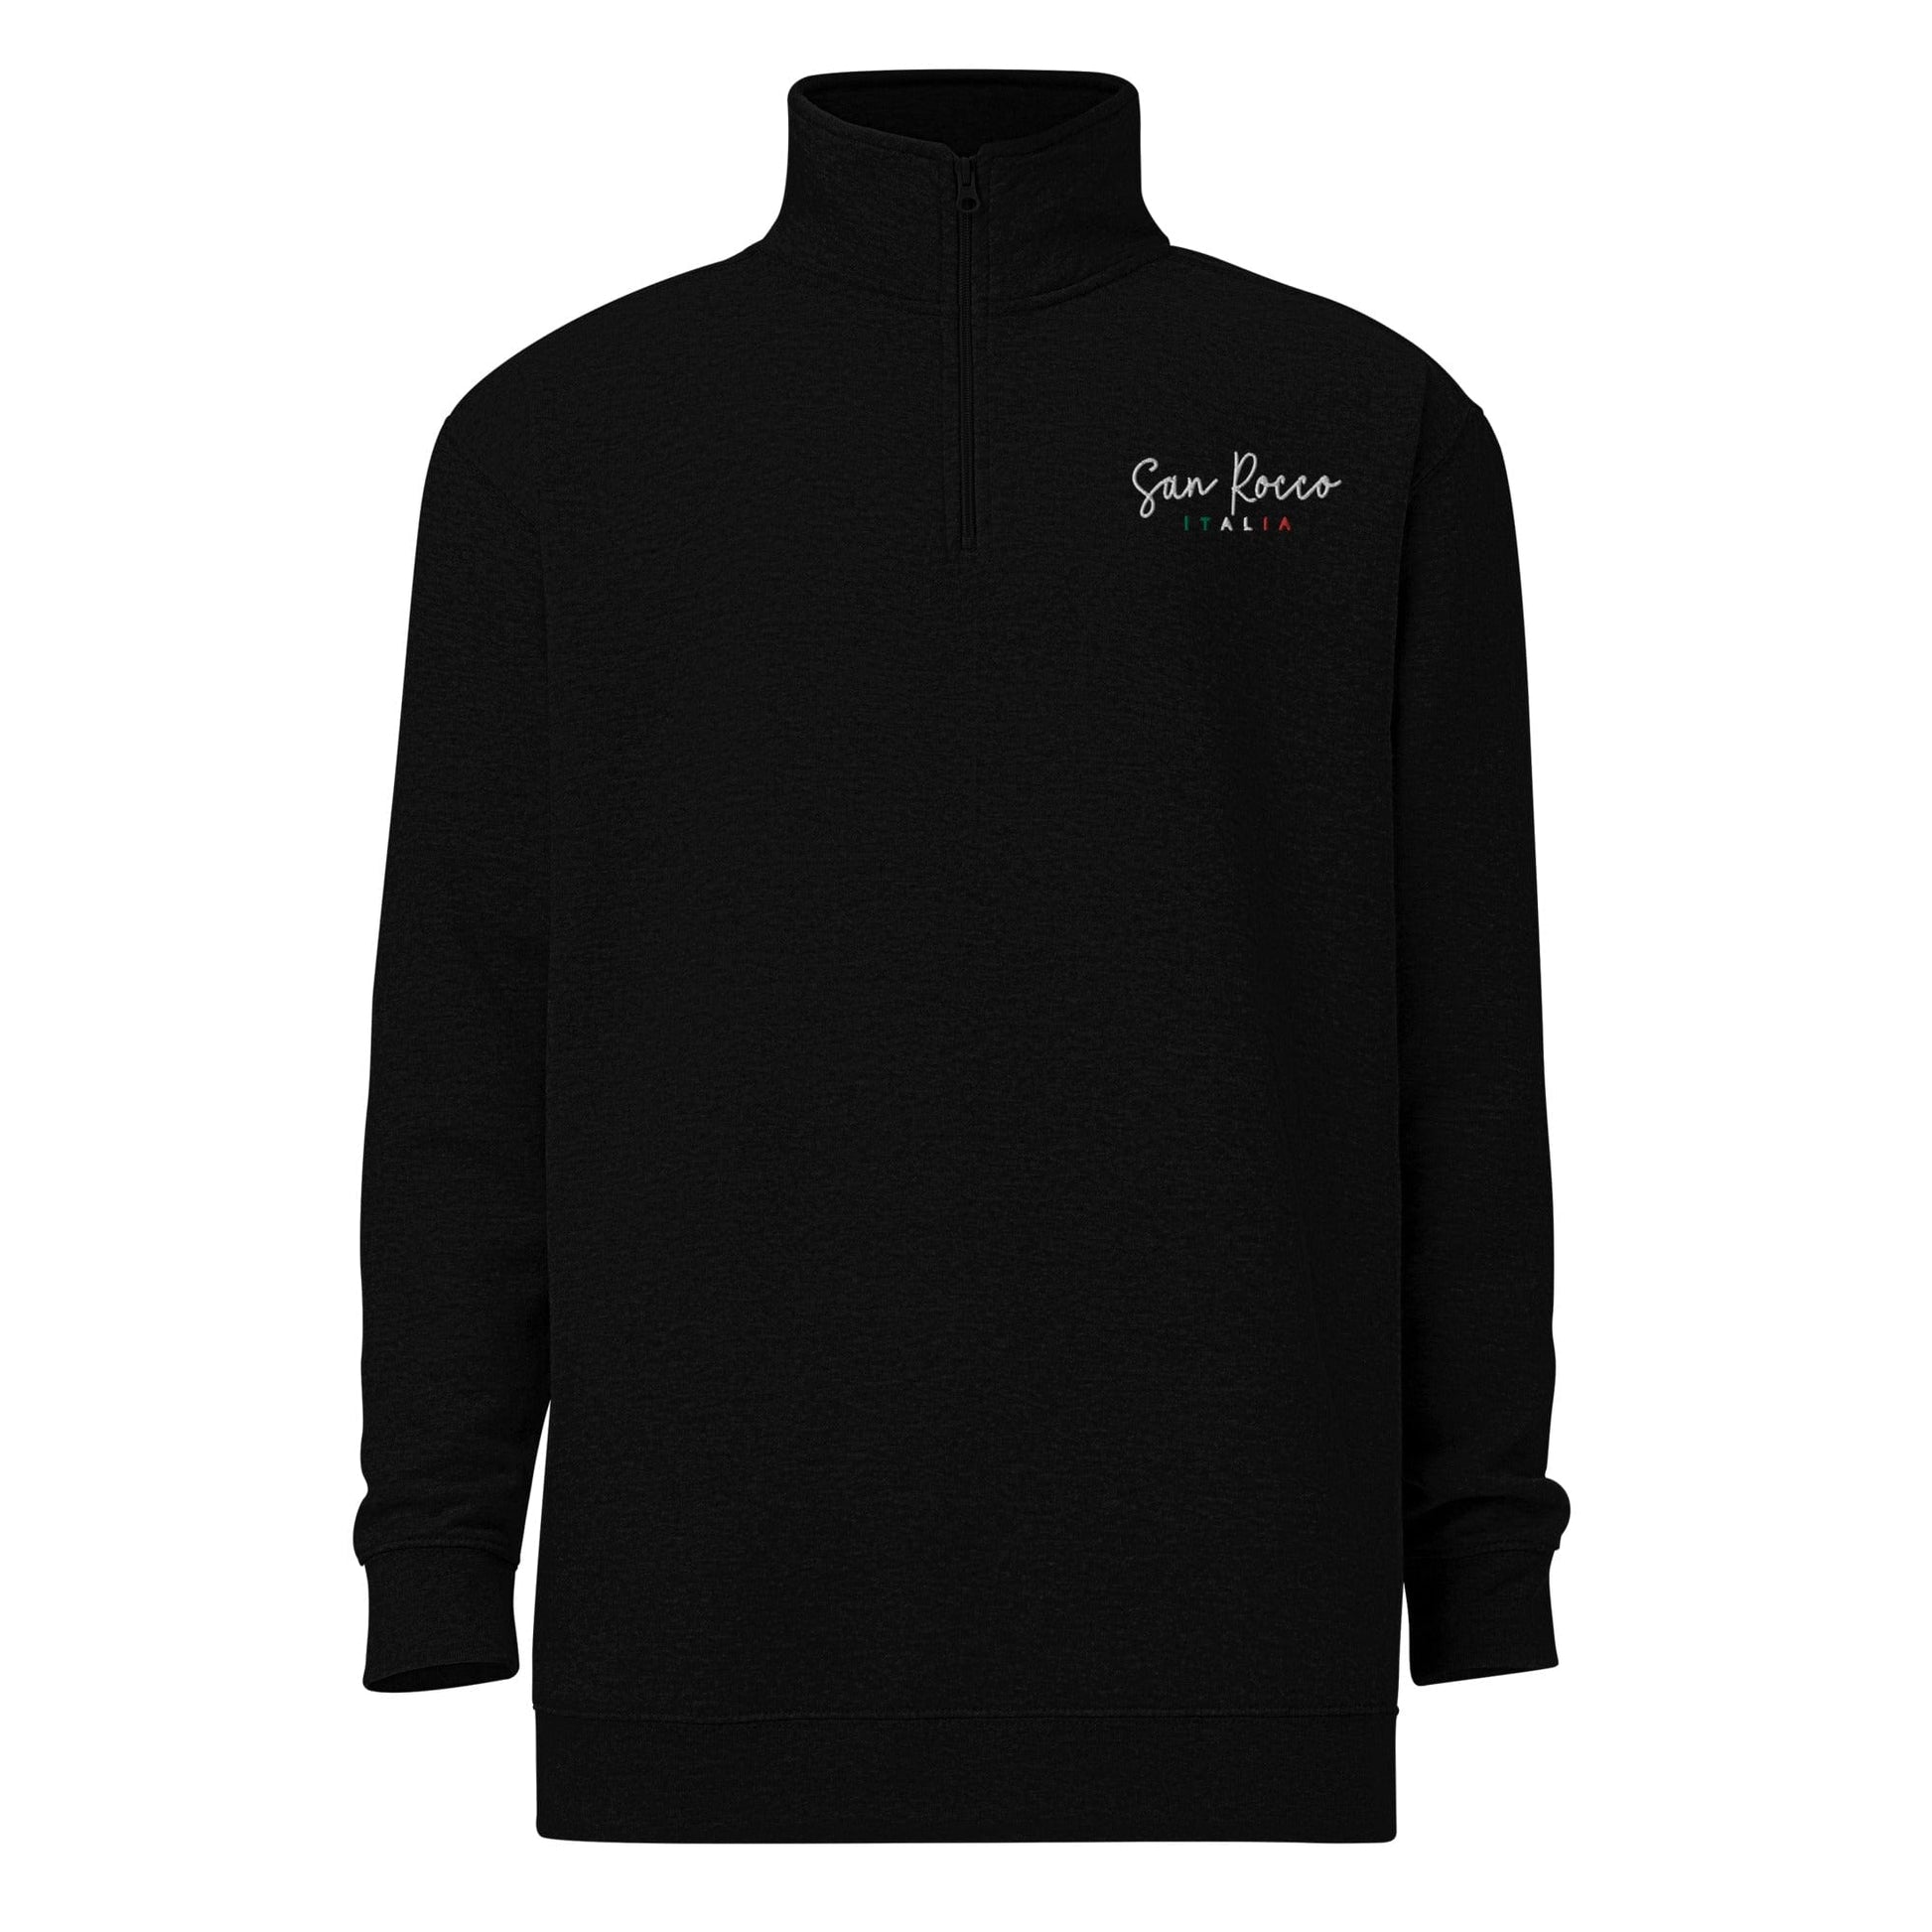 San Rocco Italia embroidered logo unisex fleece pullover - Premium  - Shop now at San Rocco Italia